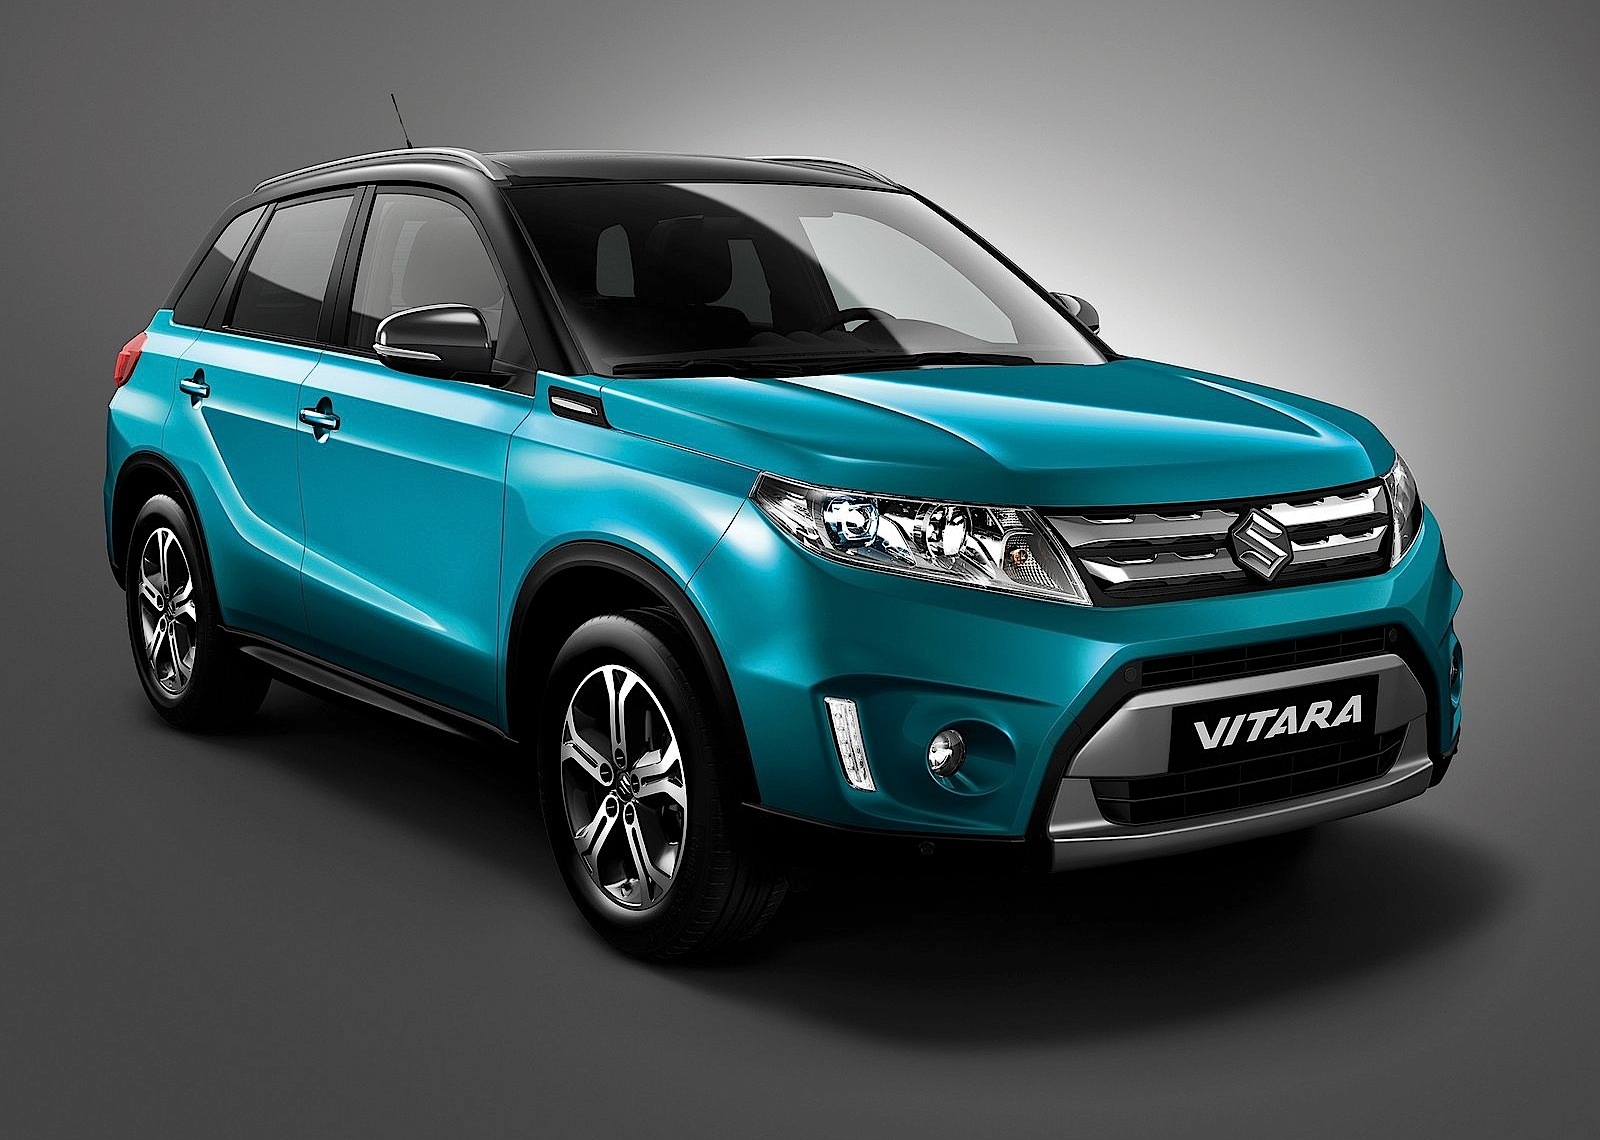 2021 Suzuki Vitara 1.6L GLX AllGrip 6-AT - Car Reviews